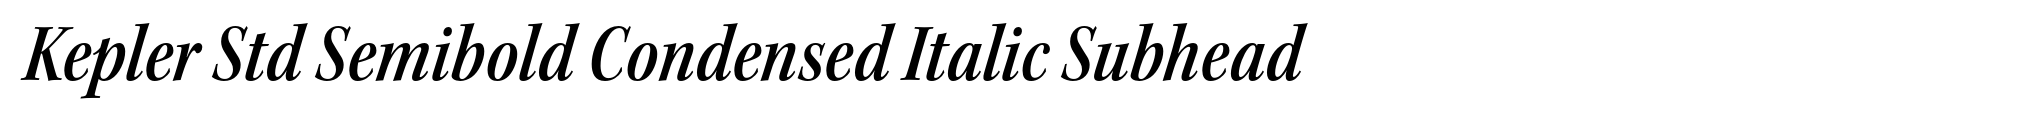 Kepler Std Semibold Condensed Italic Subhead image